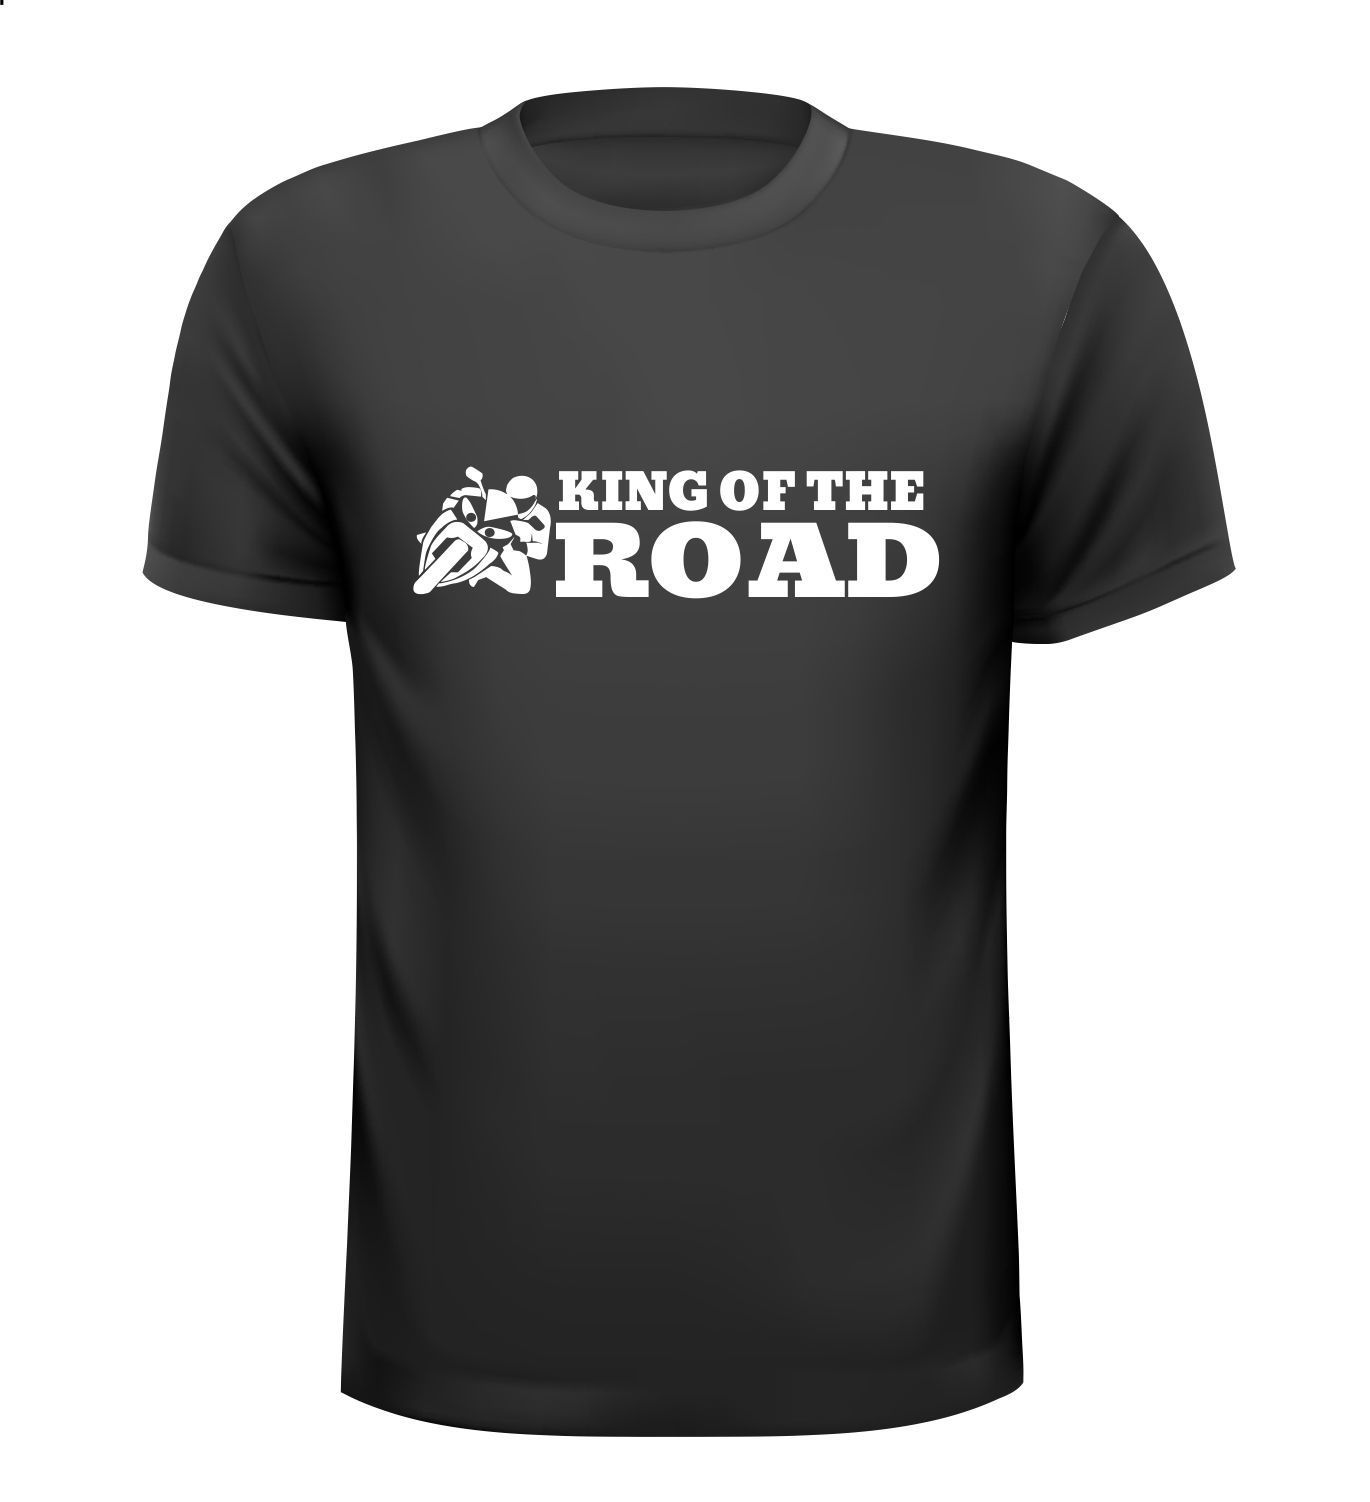 T-shirt King of the road motorrijder motor liefhebber race